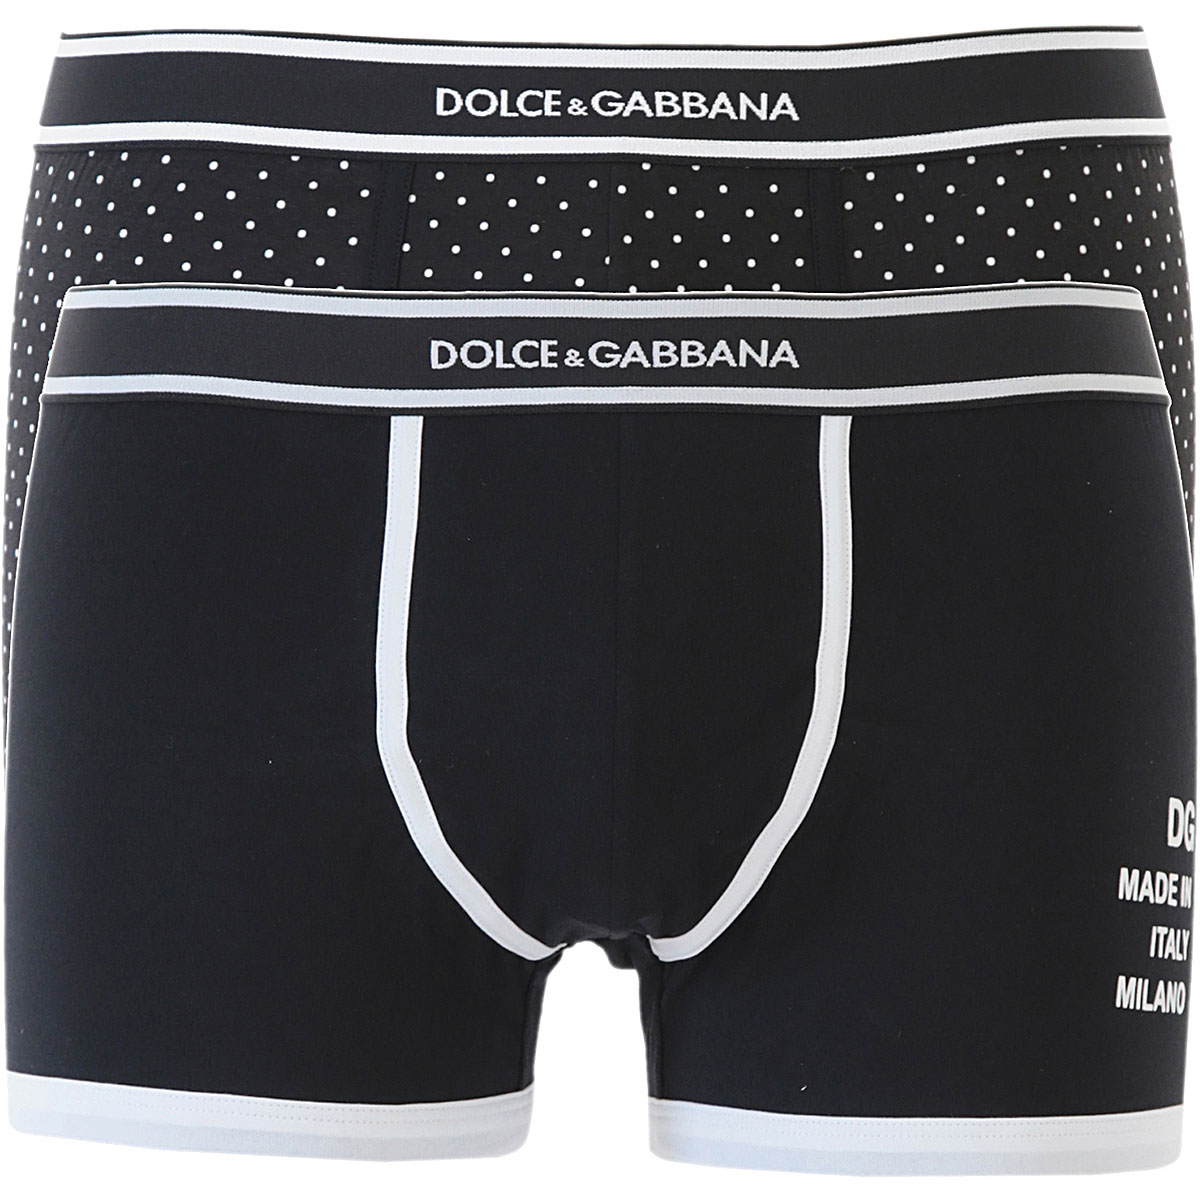 Mens Underwear Dolce & Gabbana, Style code: m9a81j-0nl51-8l996